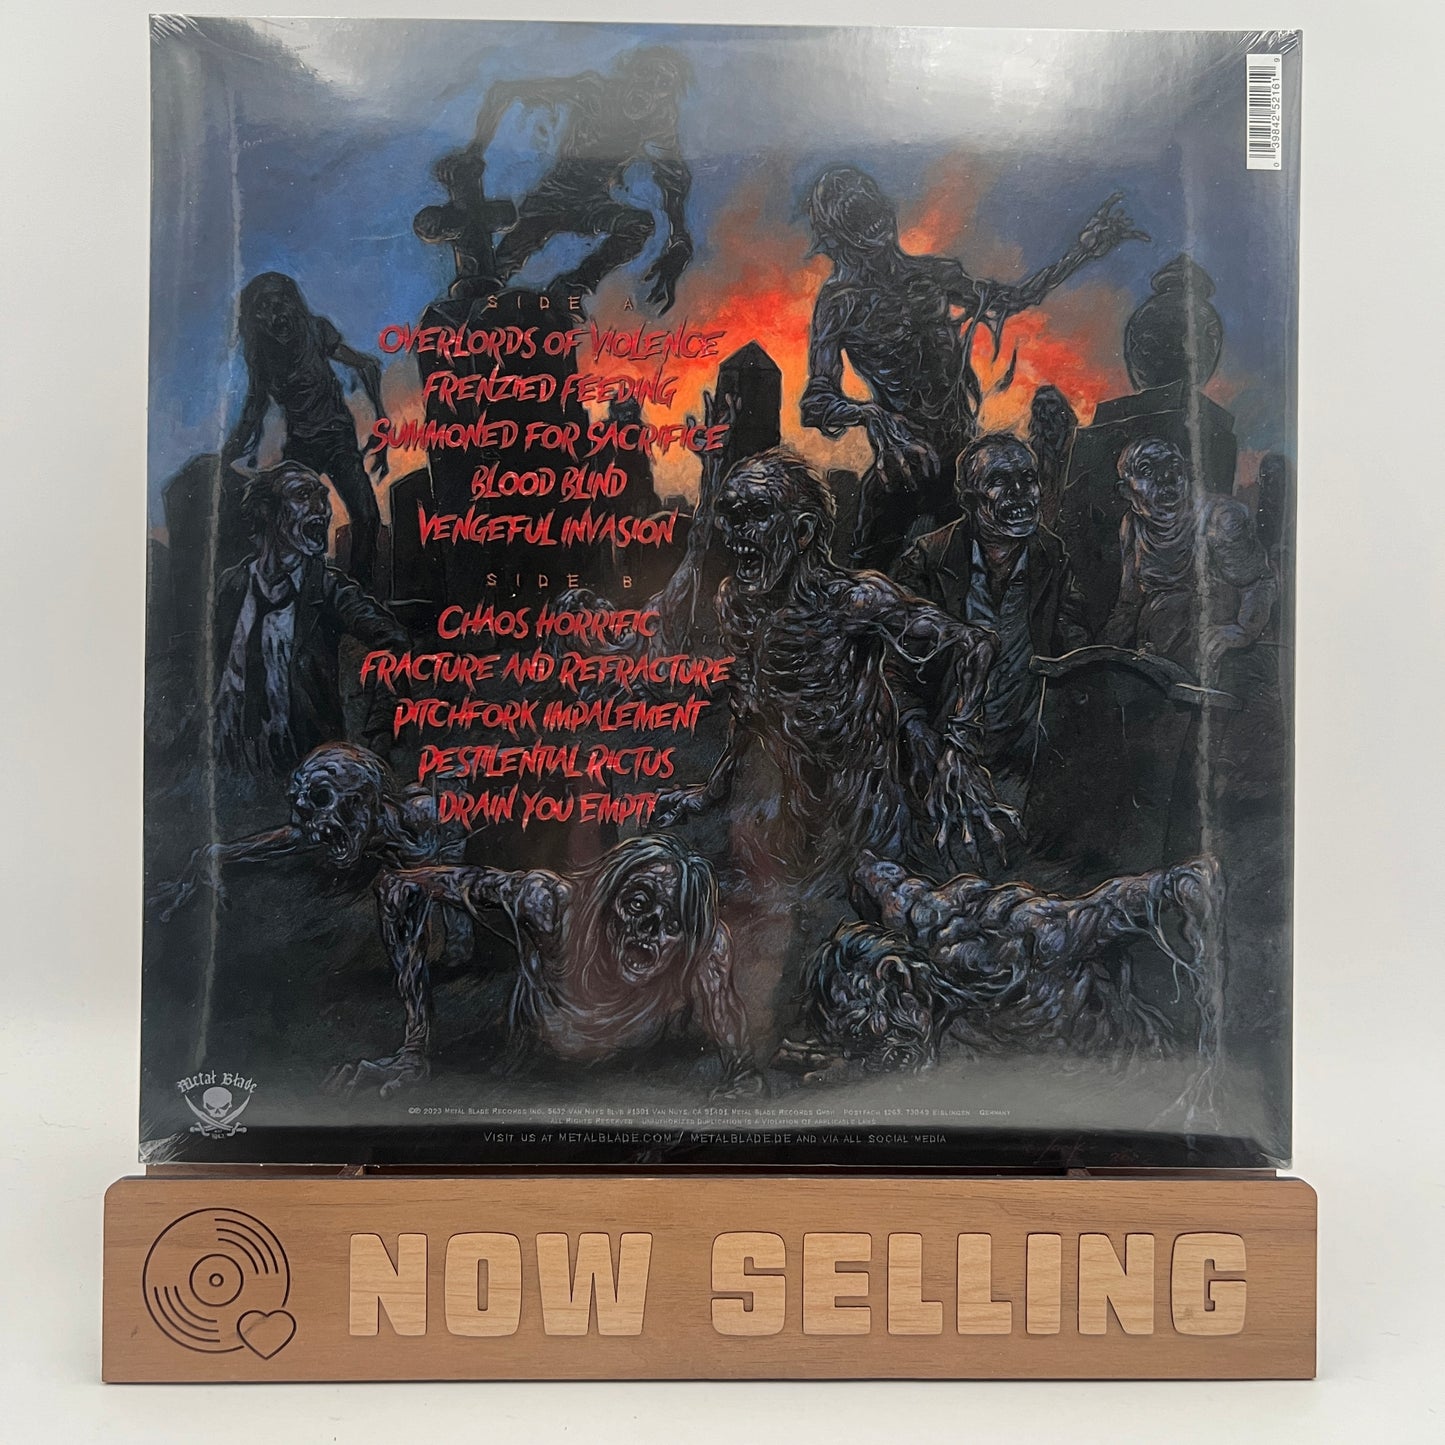 Cannibal Corpse - Chaos Horrific Vinyl LP Orange Marbled SEALED